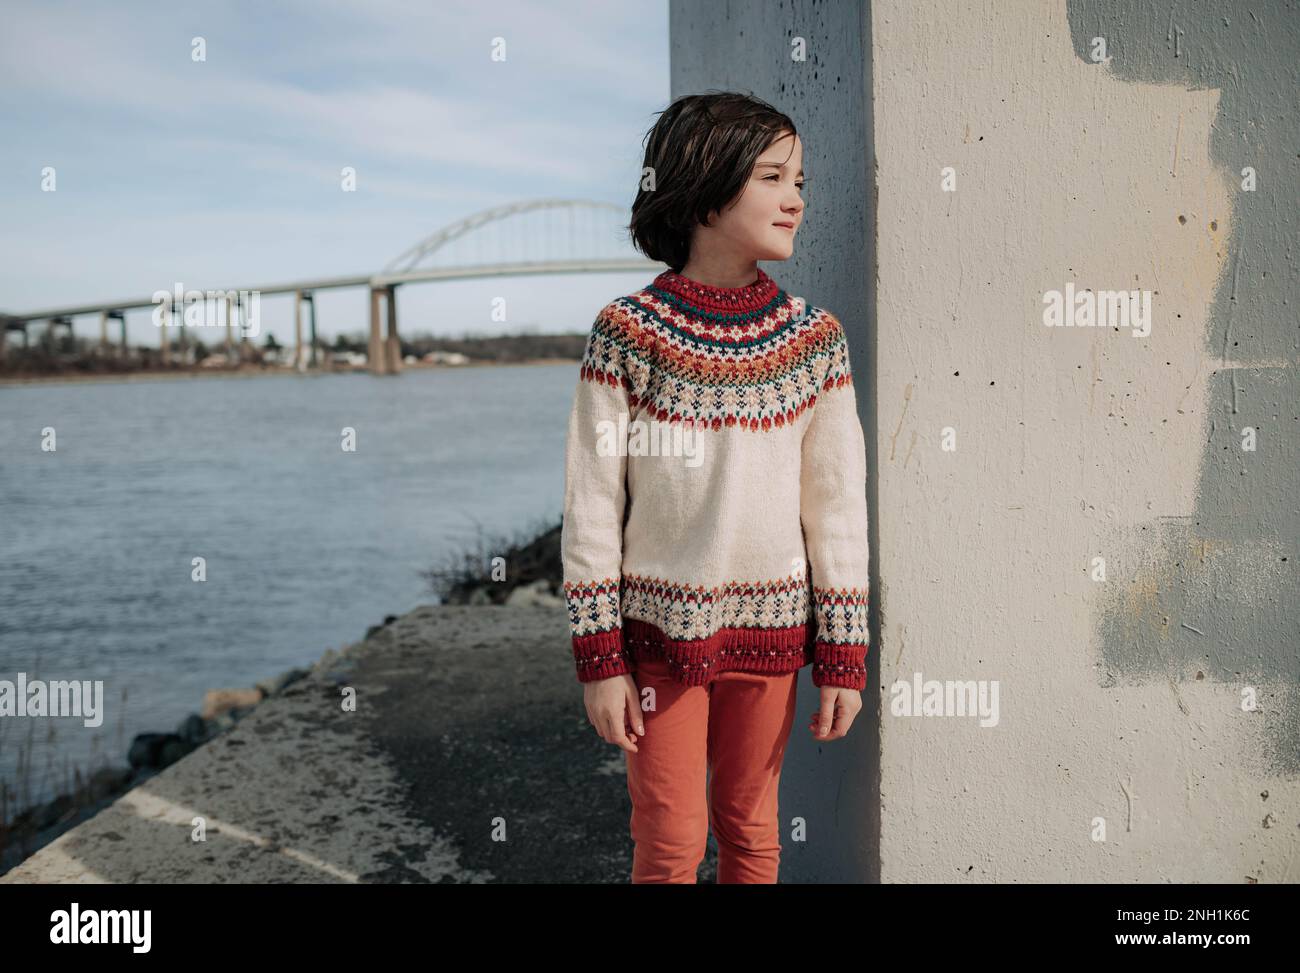 girl smiling under bridge with bridge behind her Stock Photo